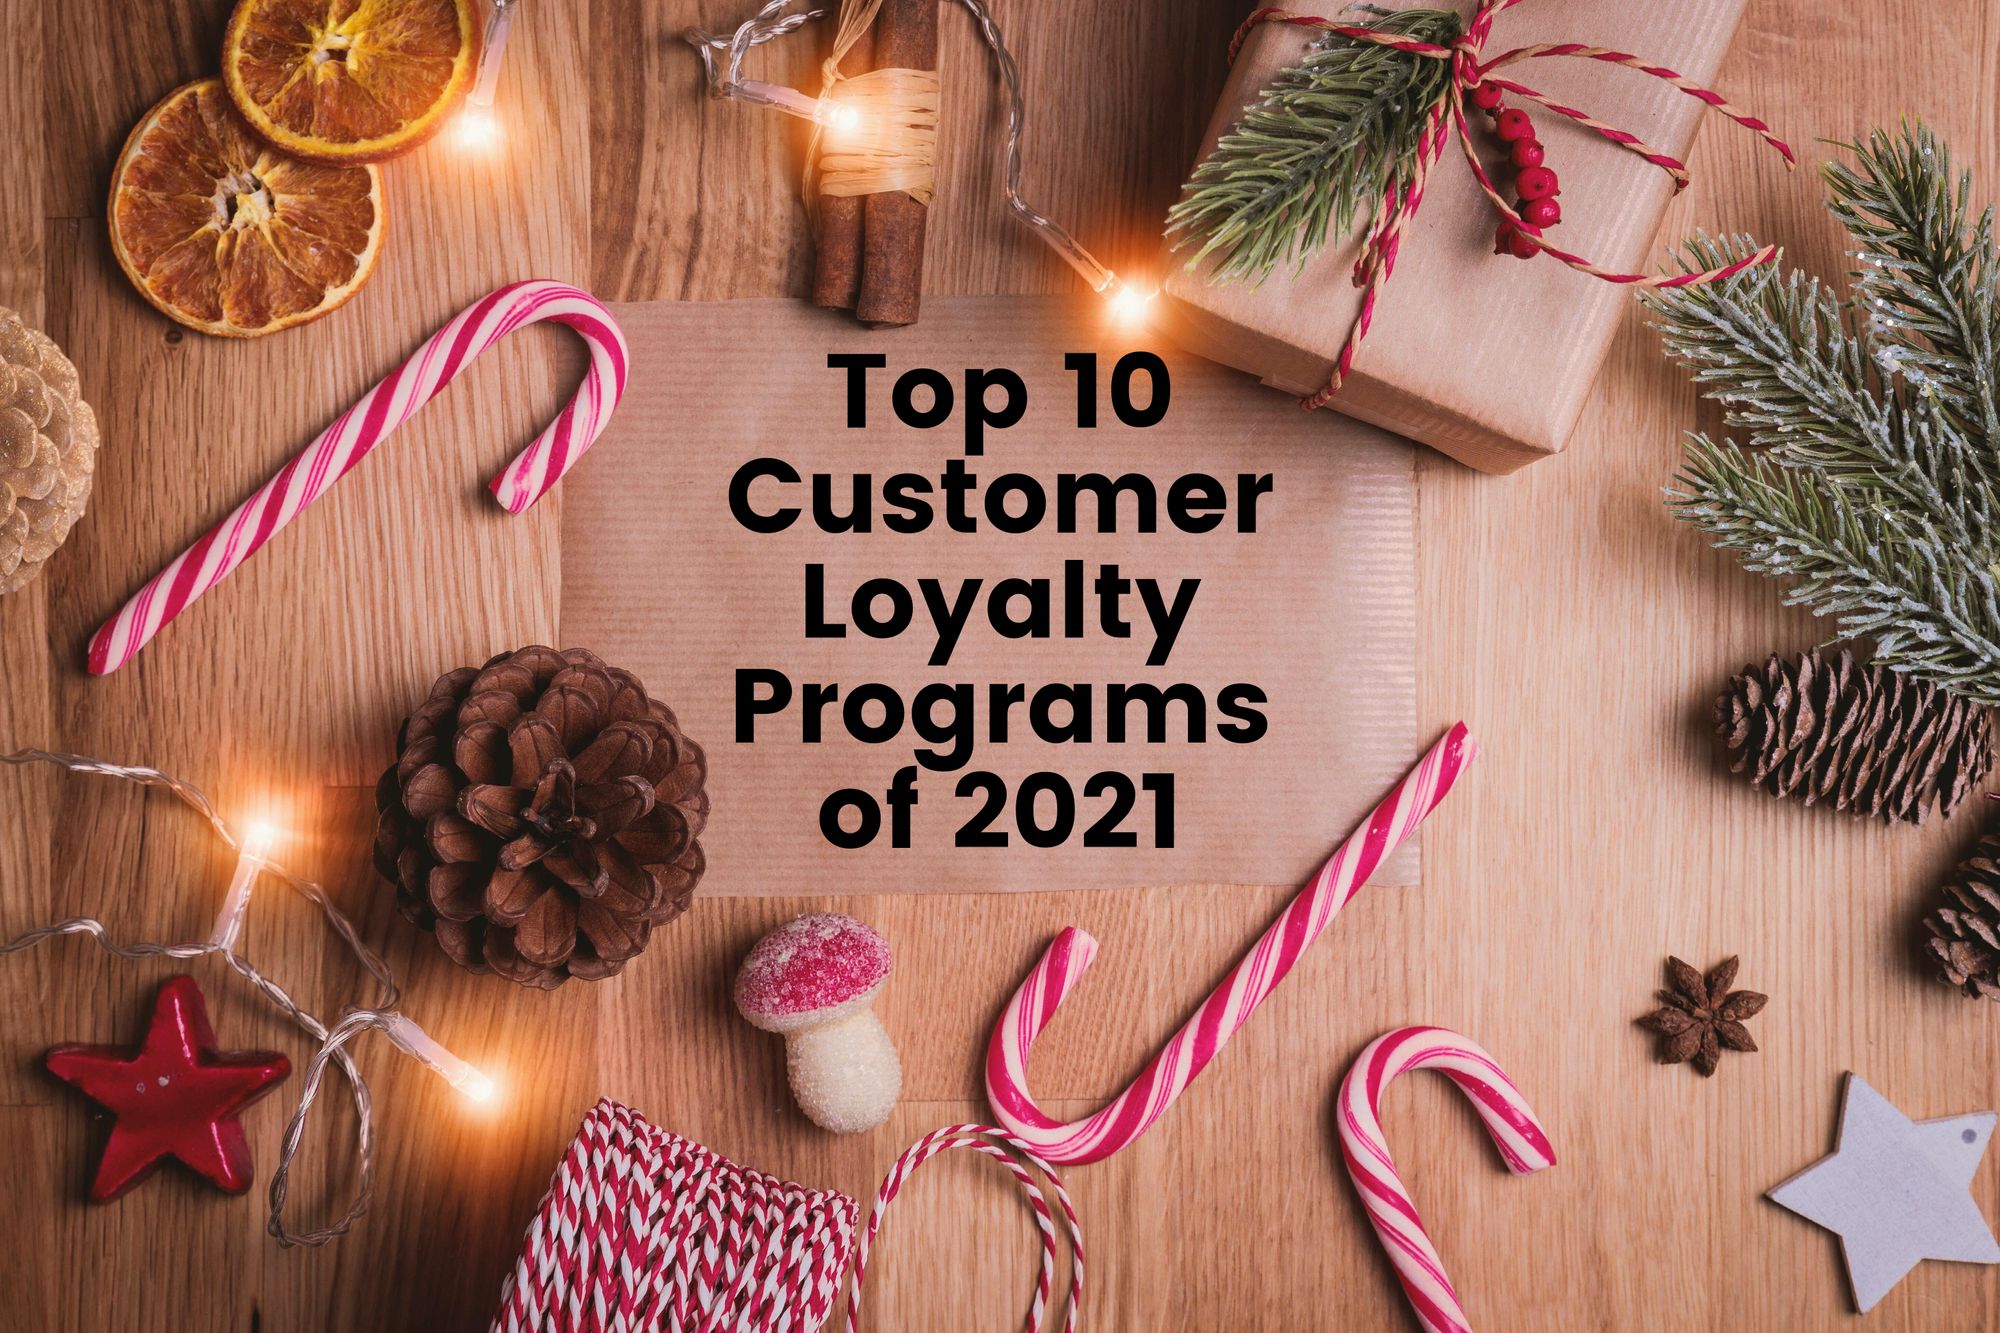 Top 10 Customer Loyalty Programs of 2021